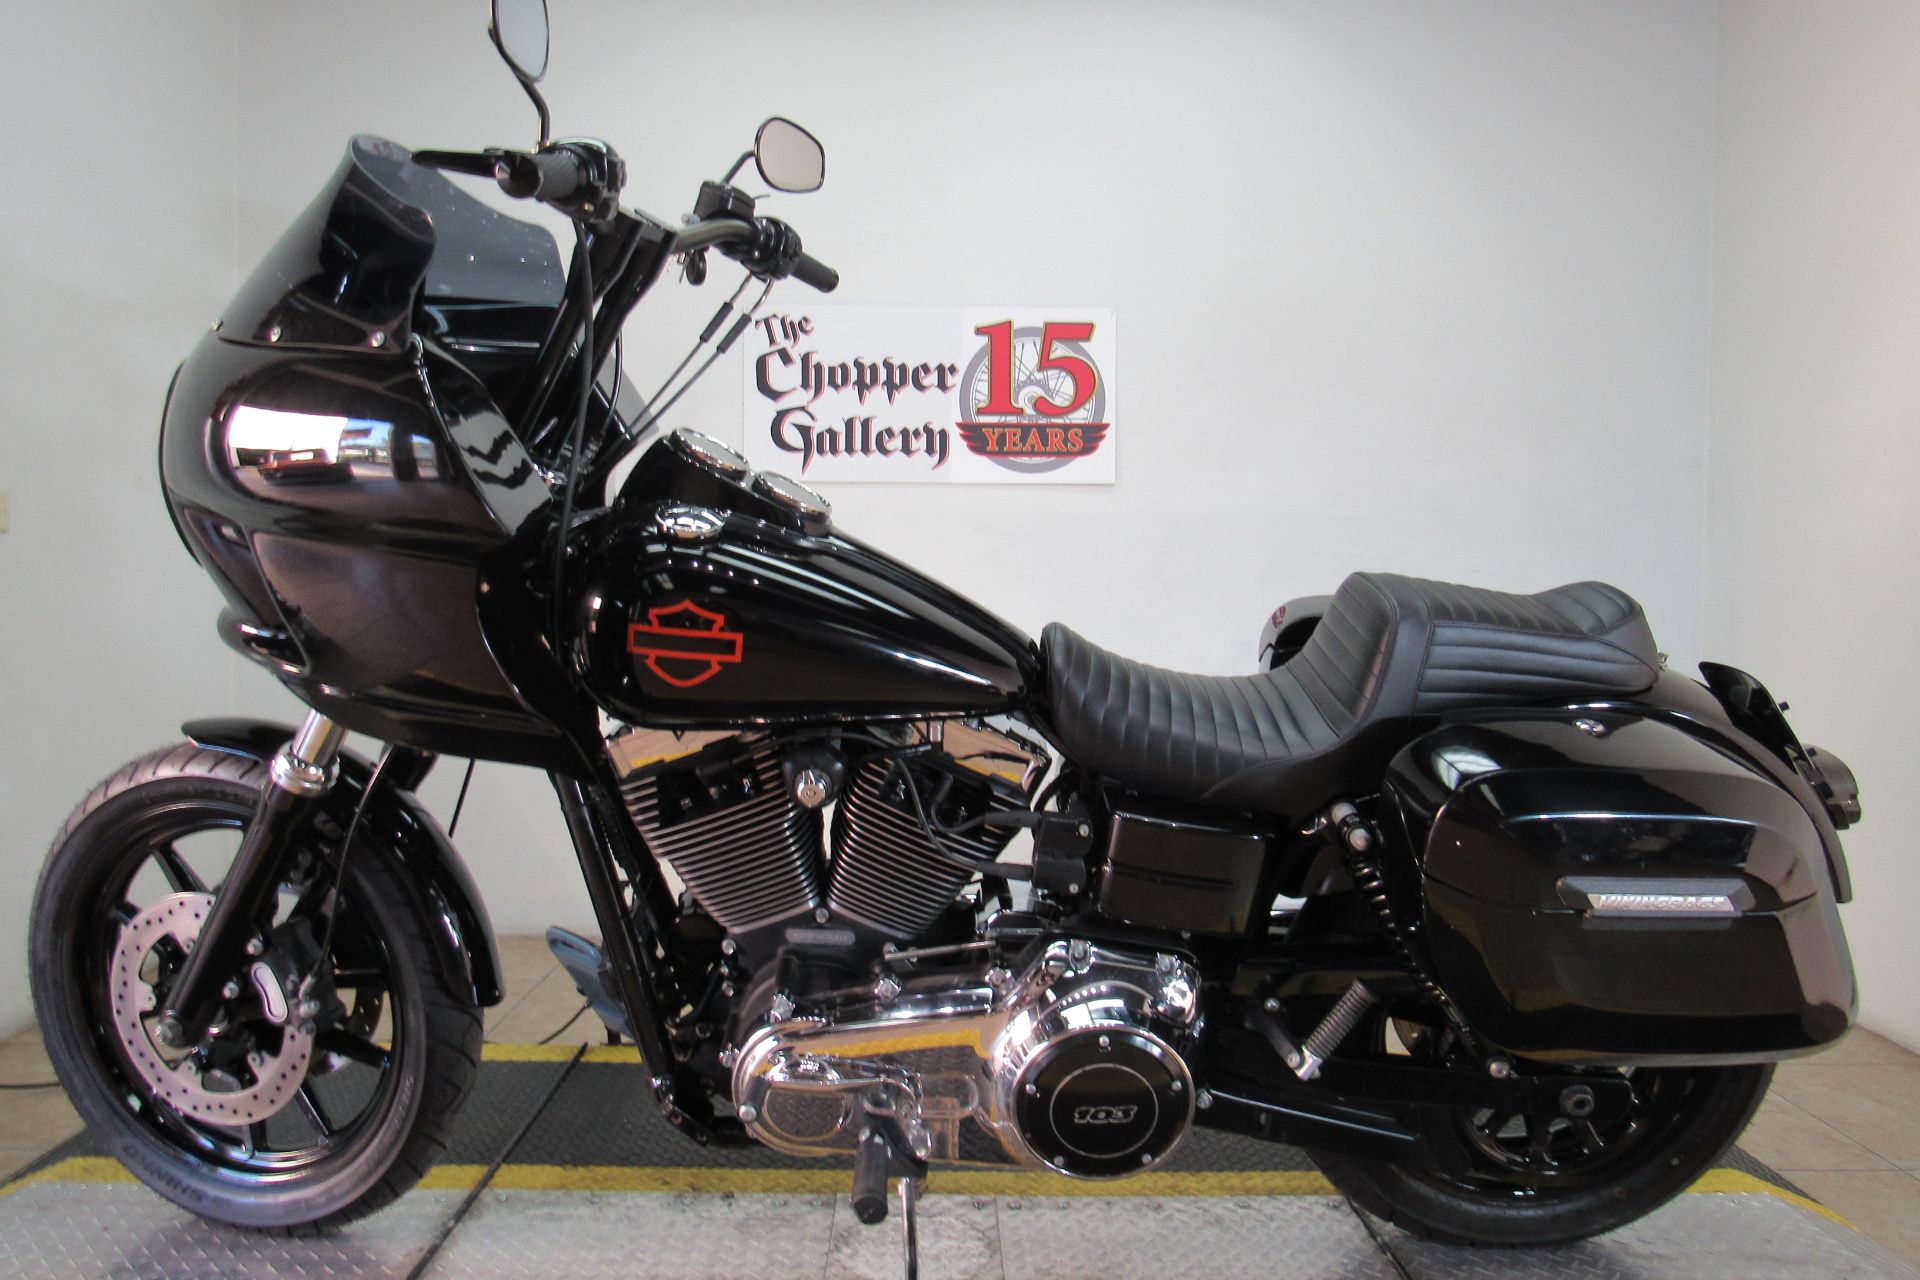 2015 Harley-Davidson Low Rider® in Temecula, California - Photo 2